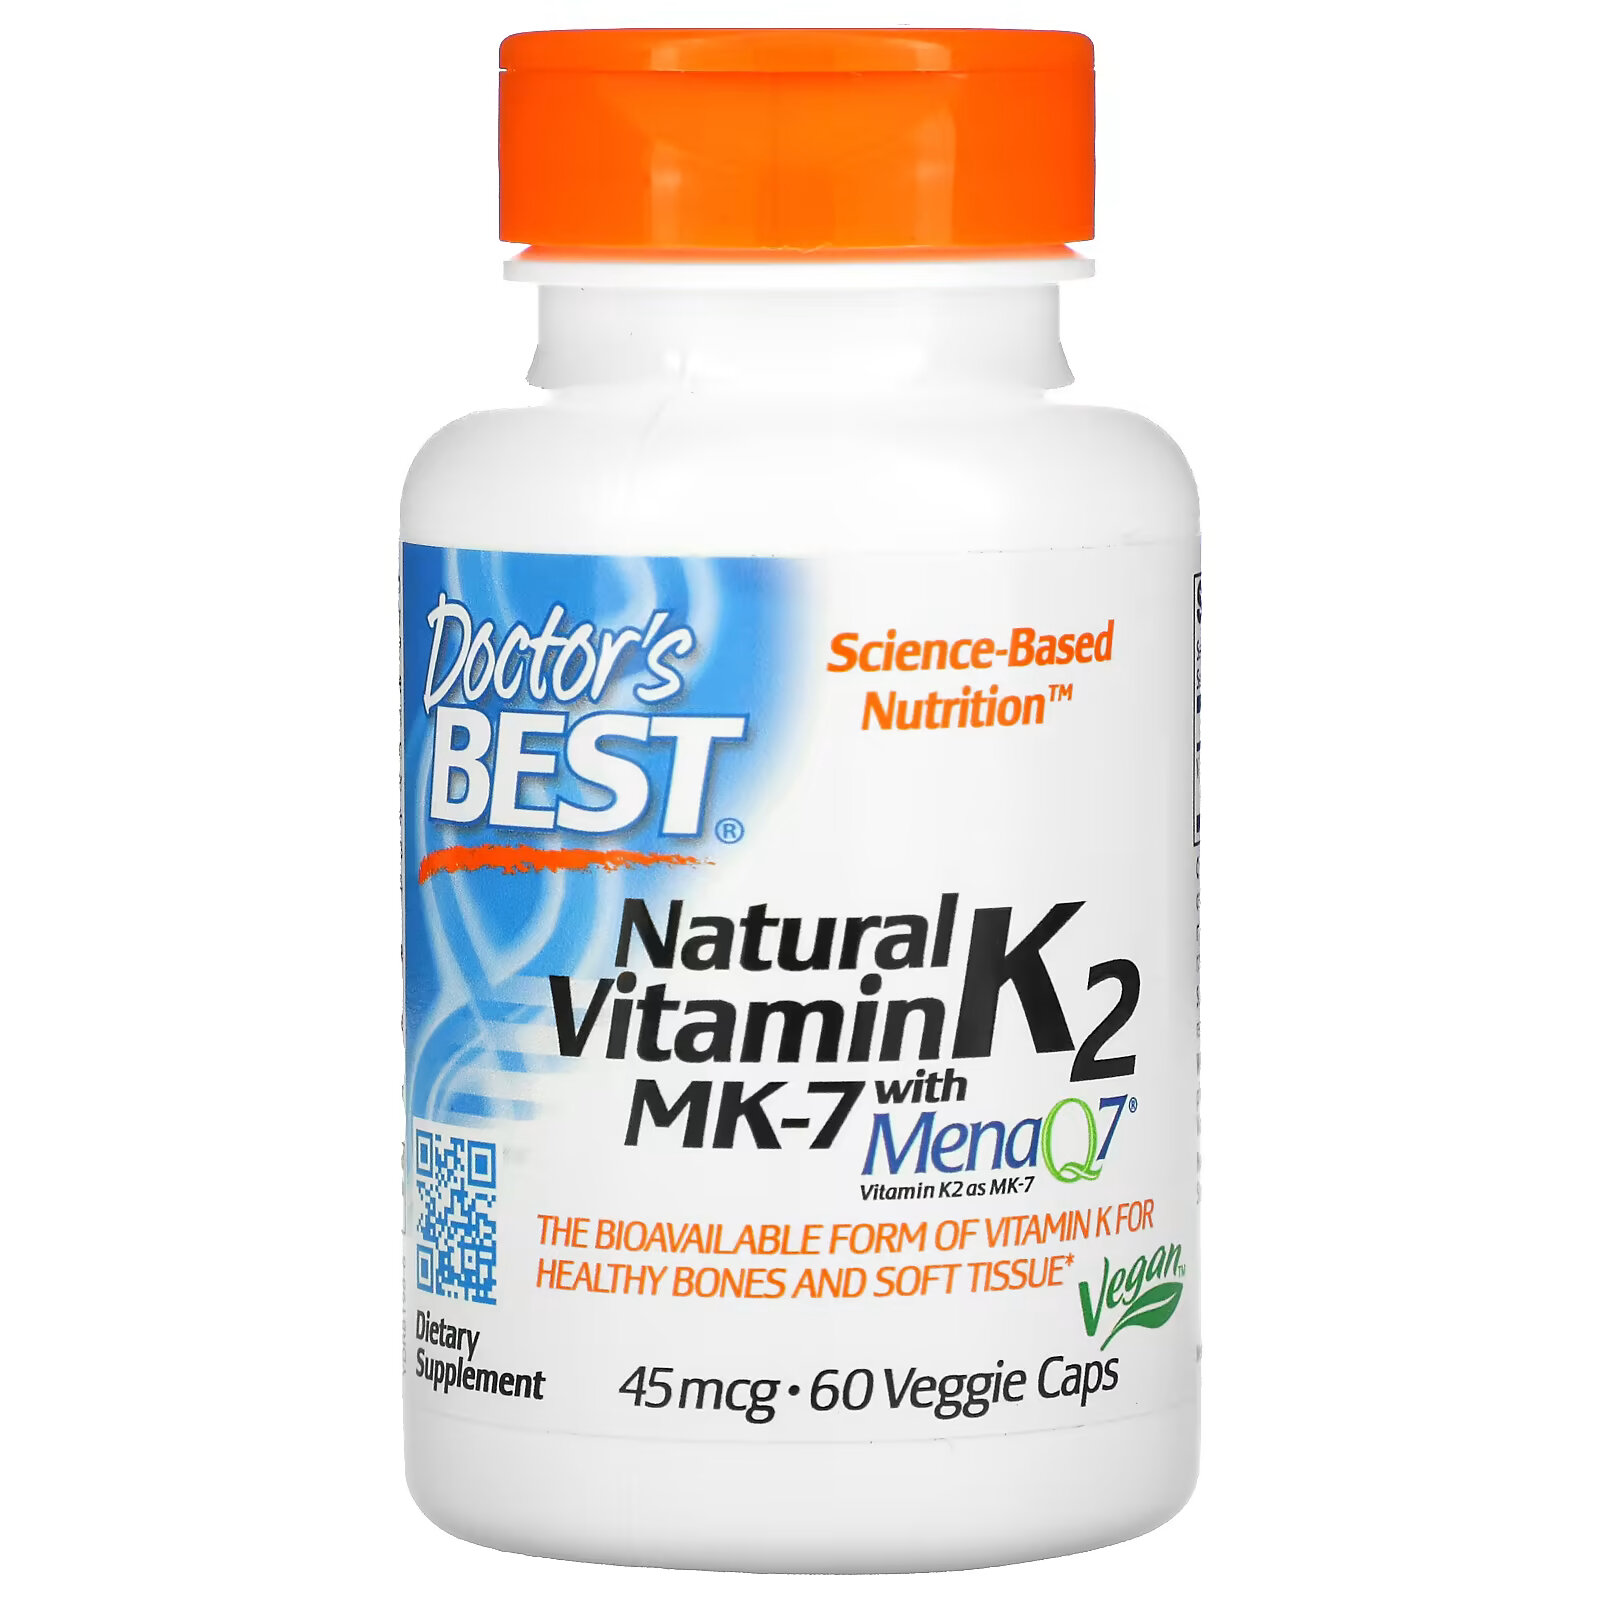 Doctor's Best витамин K2 MK-7 с MenaQ7, 45 мкг, 60 вегетарианских капсул натуральный витамин k2 mk 7 с menaq7 doctor s best 100 мкг 60 растительных капсул